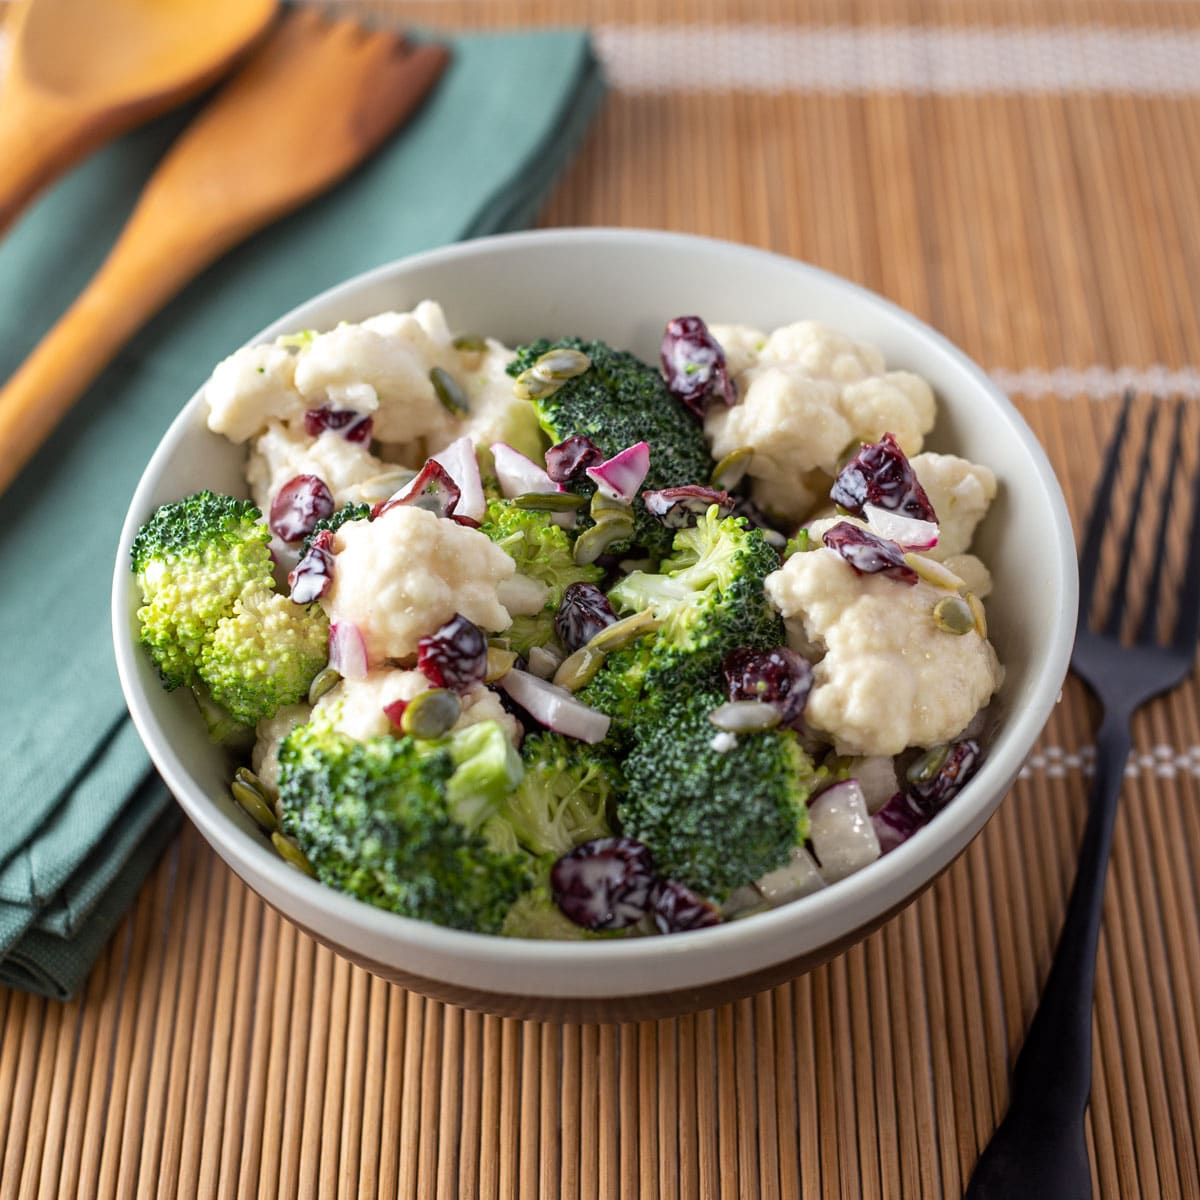 Vierkant beeld van broccoli-bloemkoolsalade.